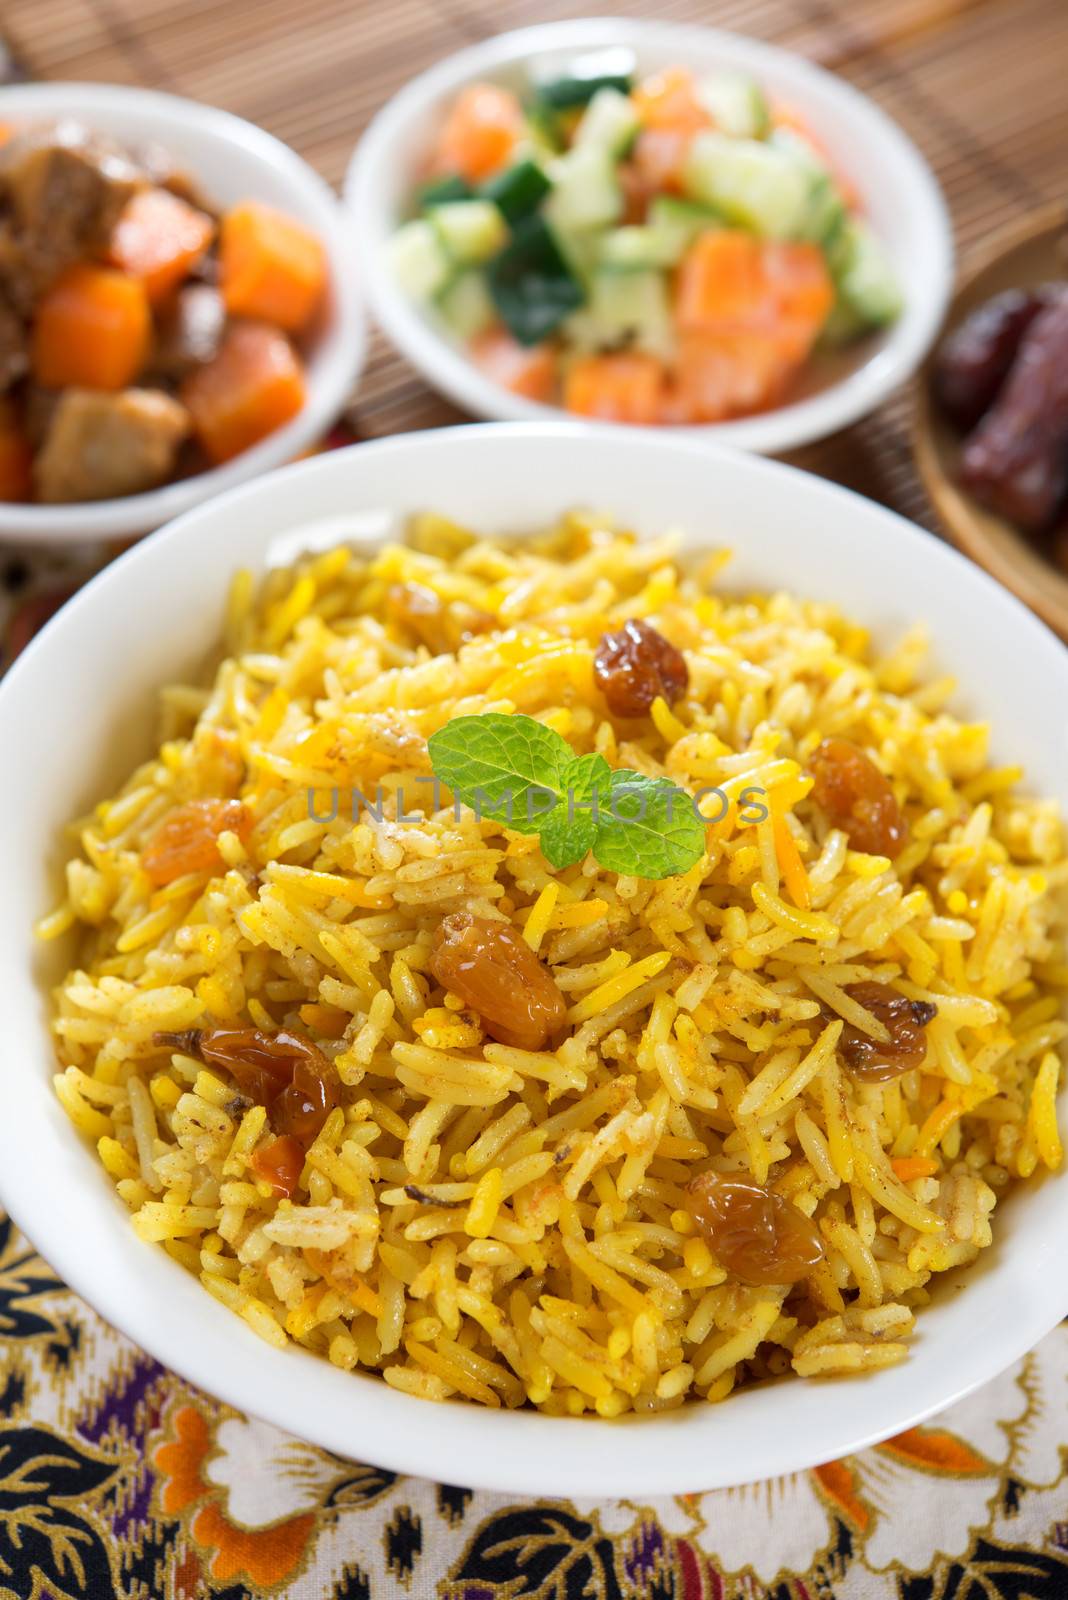 Arab rice, Ramadan food in middle east usually served with tandoor lamb and Arab salad.